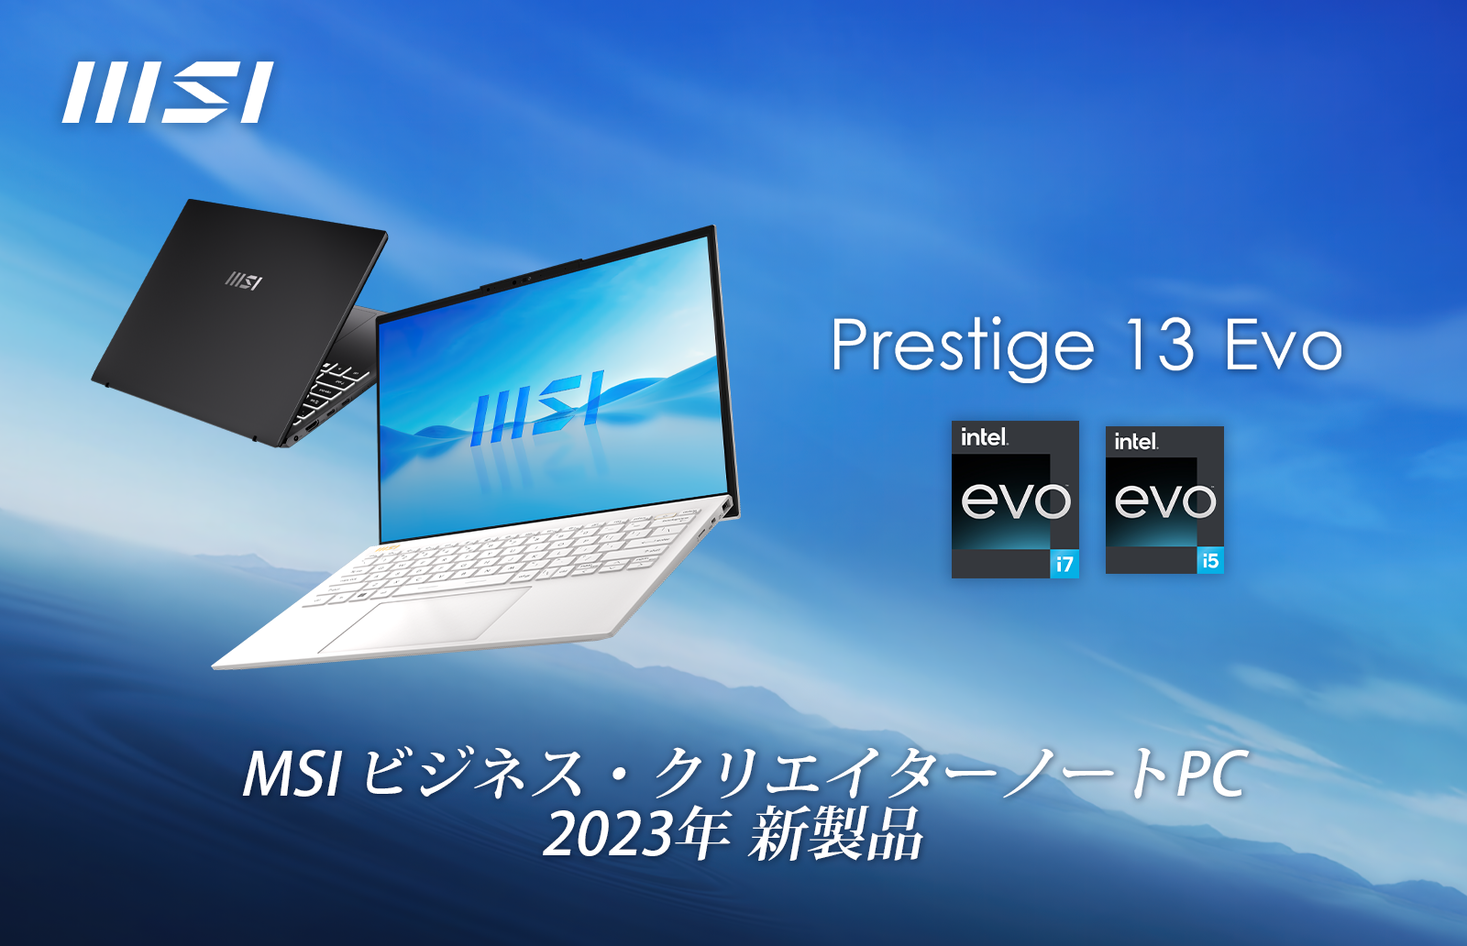 “MSI初” 1kg以下の超軽量モデル「Prestige 13 Evo A12M」誕生 ...